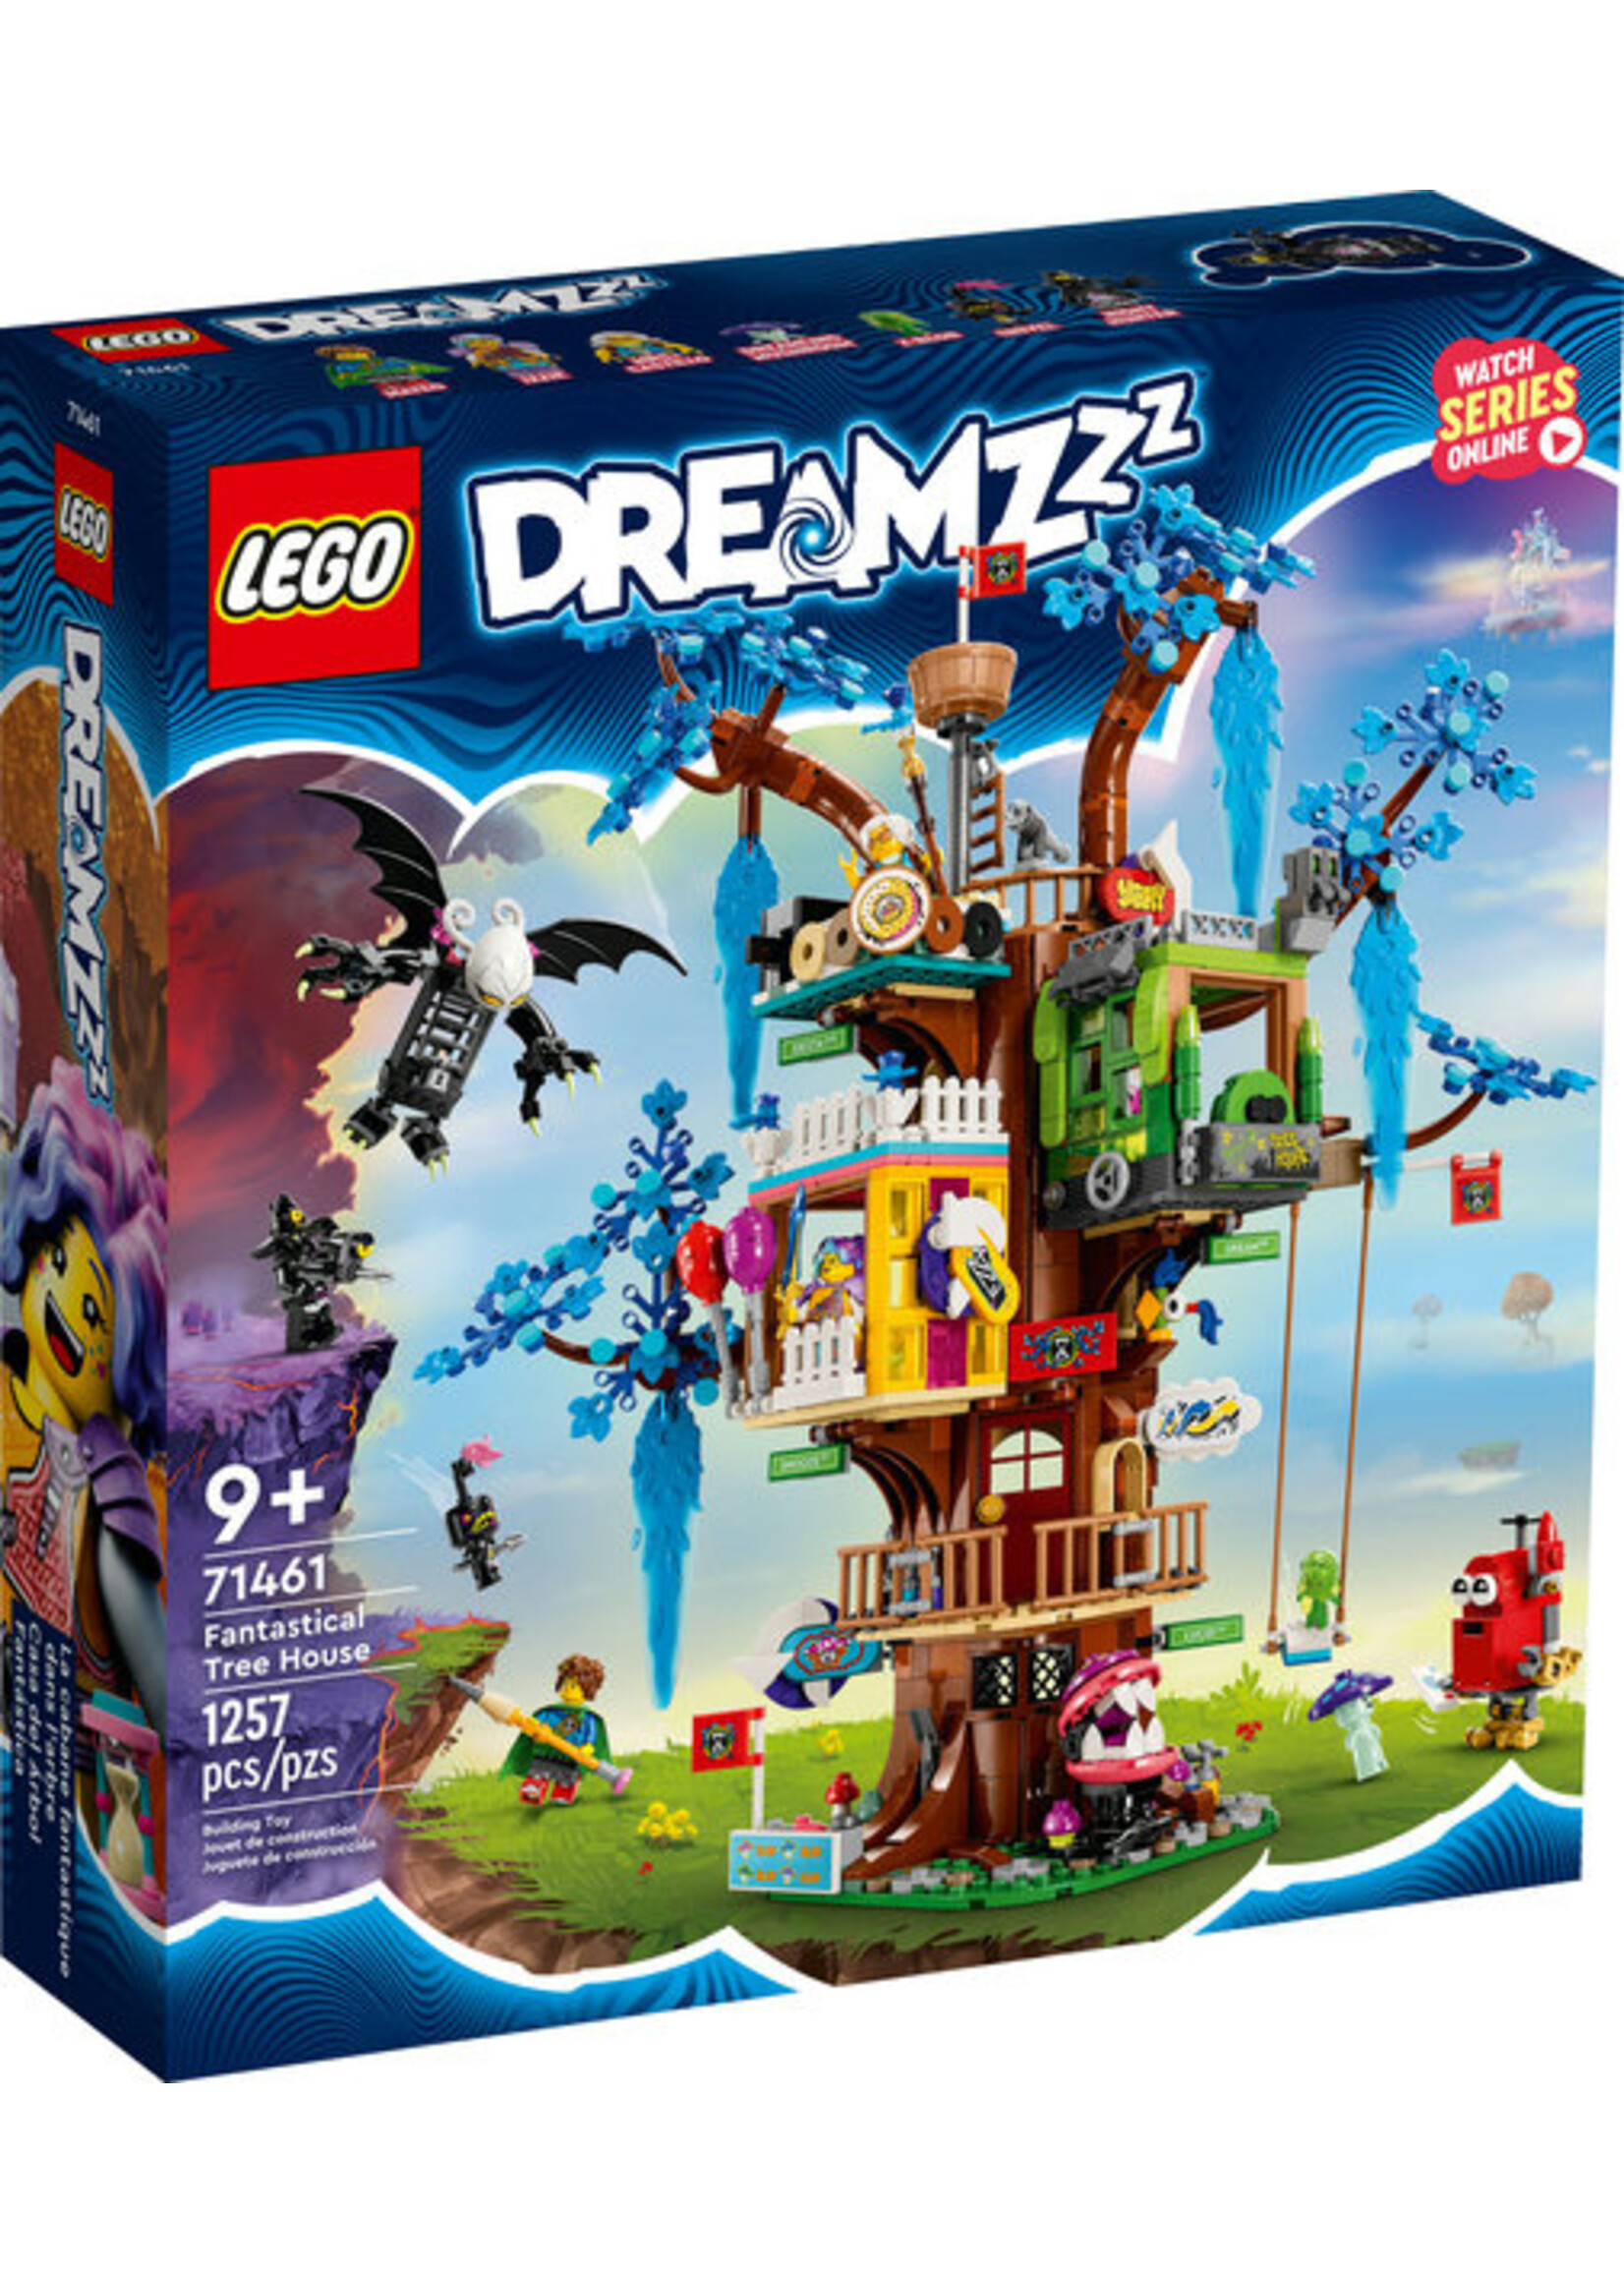 LEGO 71461 - Fantastical Tree House